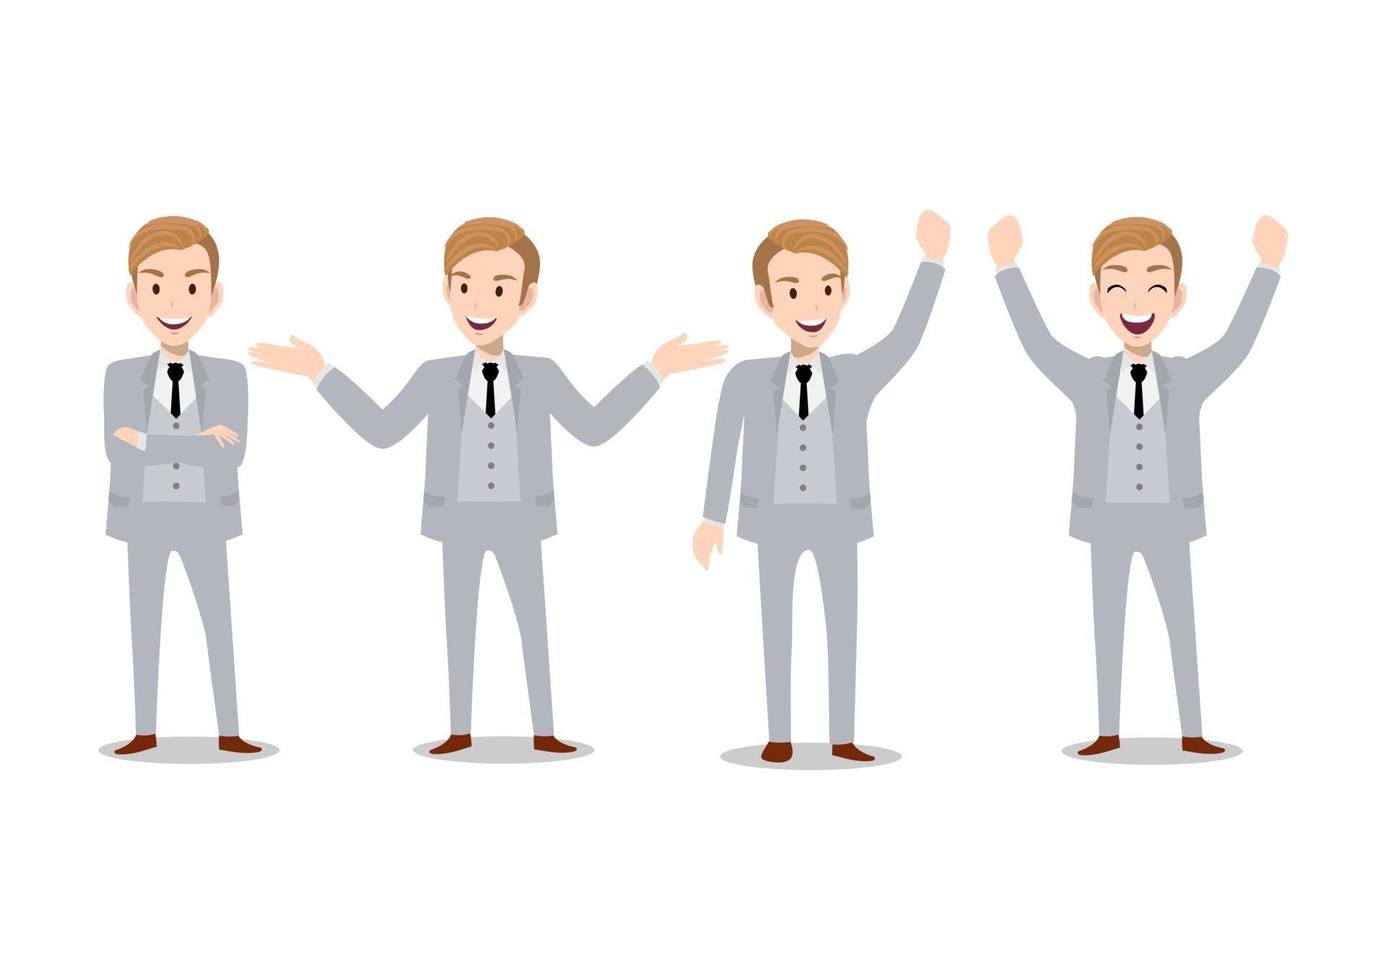 Businessman cartoon character set of four poses vector illustration